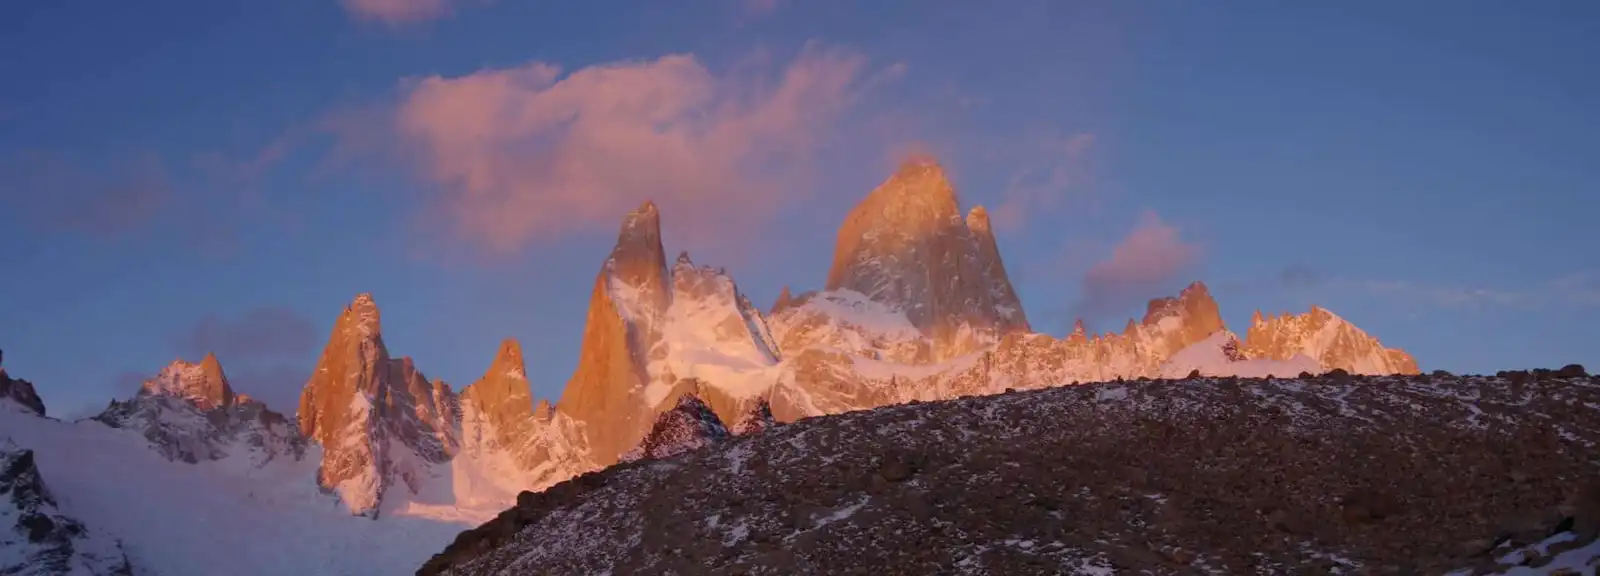 Climbing in Argentina’s mountain paradise: Cerro Madsen in El Chaltén post image